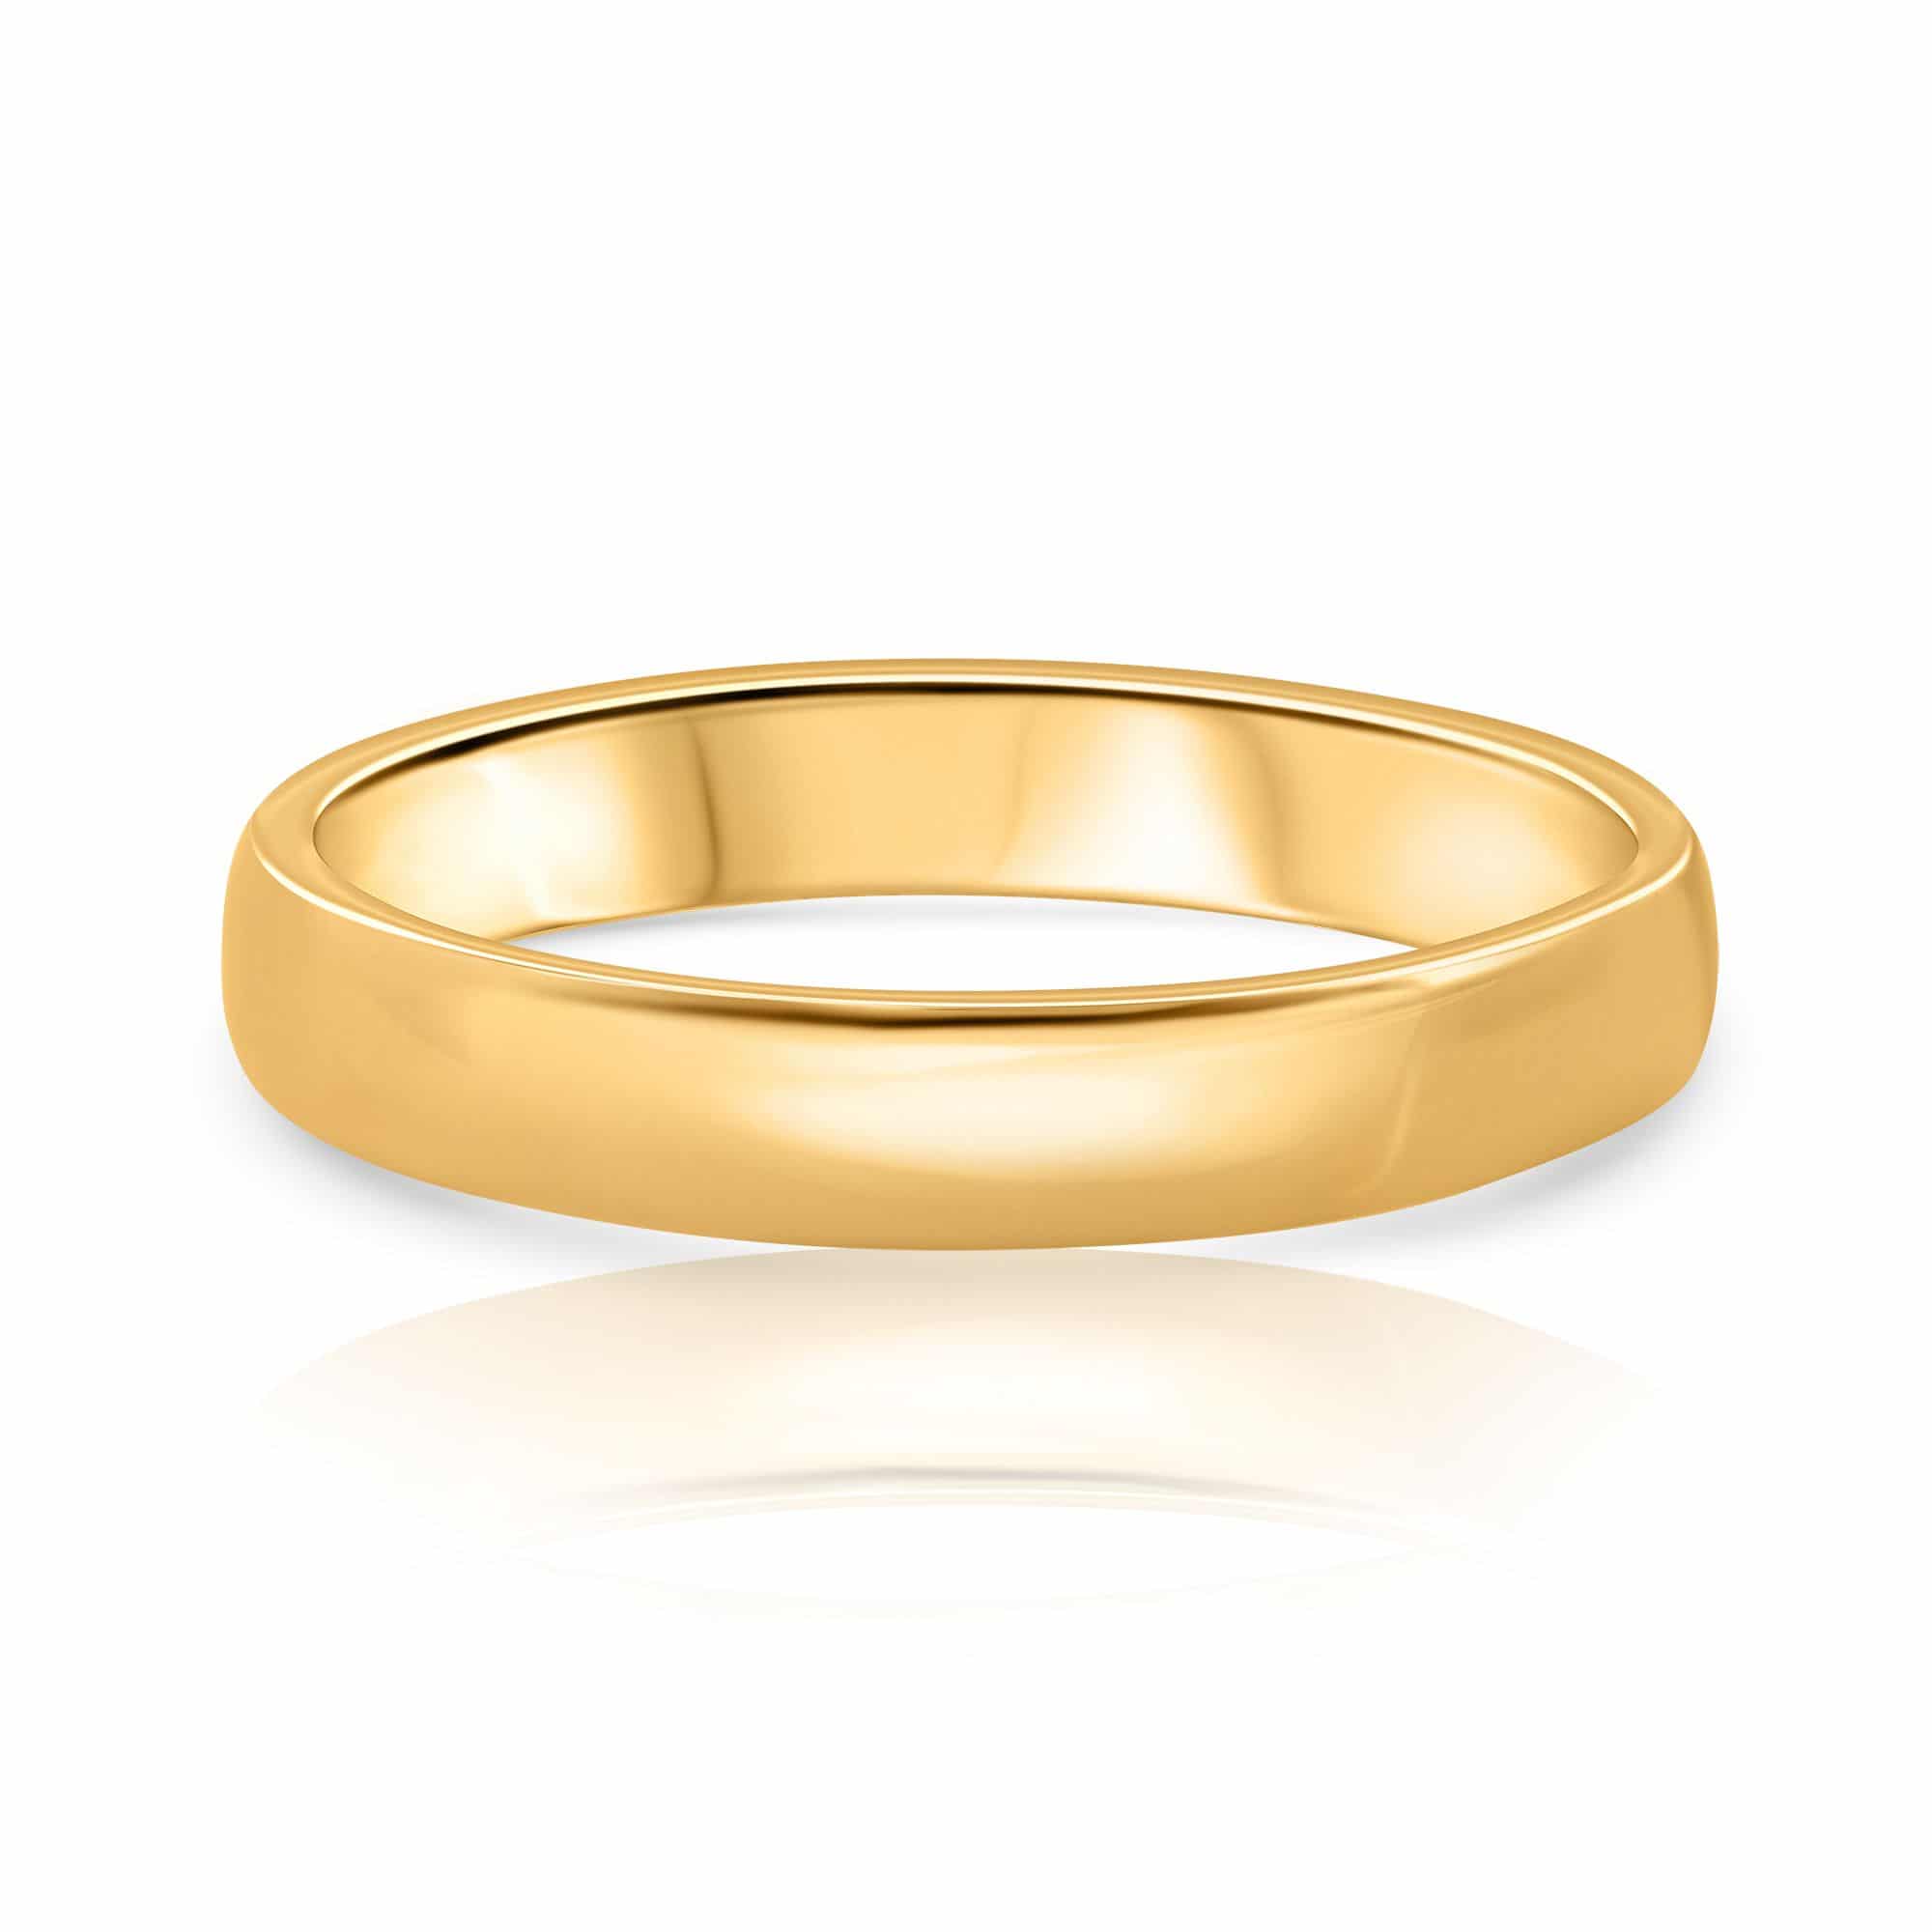 Release Orator suffer טבעת נישואים מעוצבת לגבר זהב 14 קארט - Shani Kugman - שני קוג׳מן